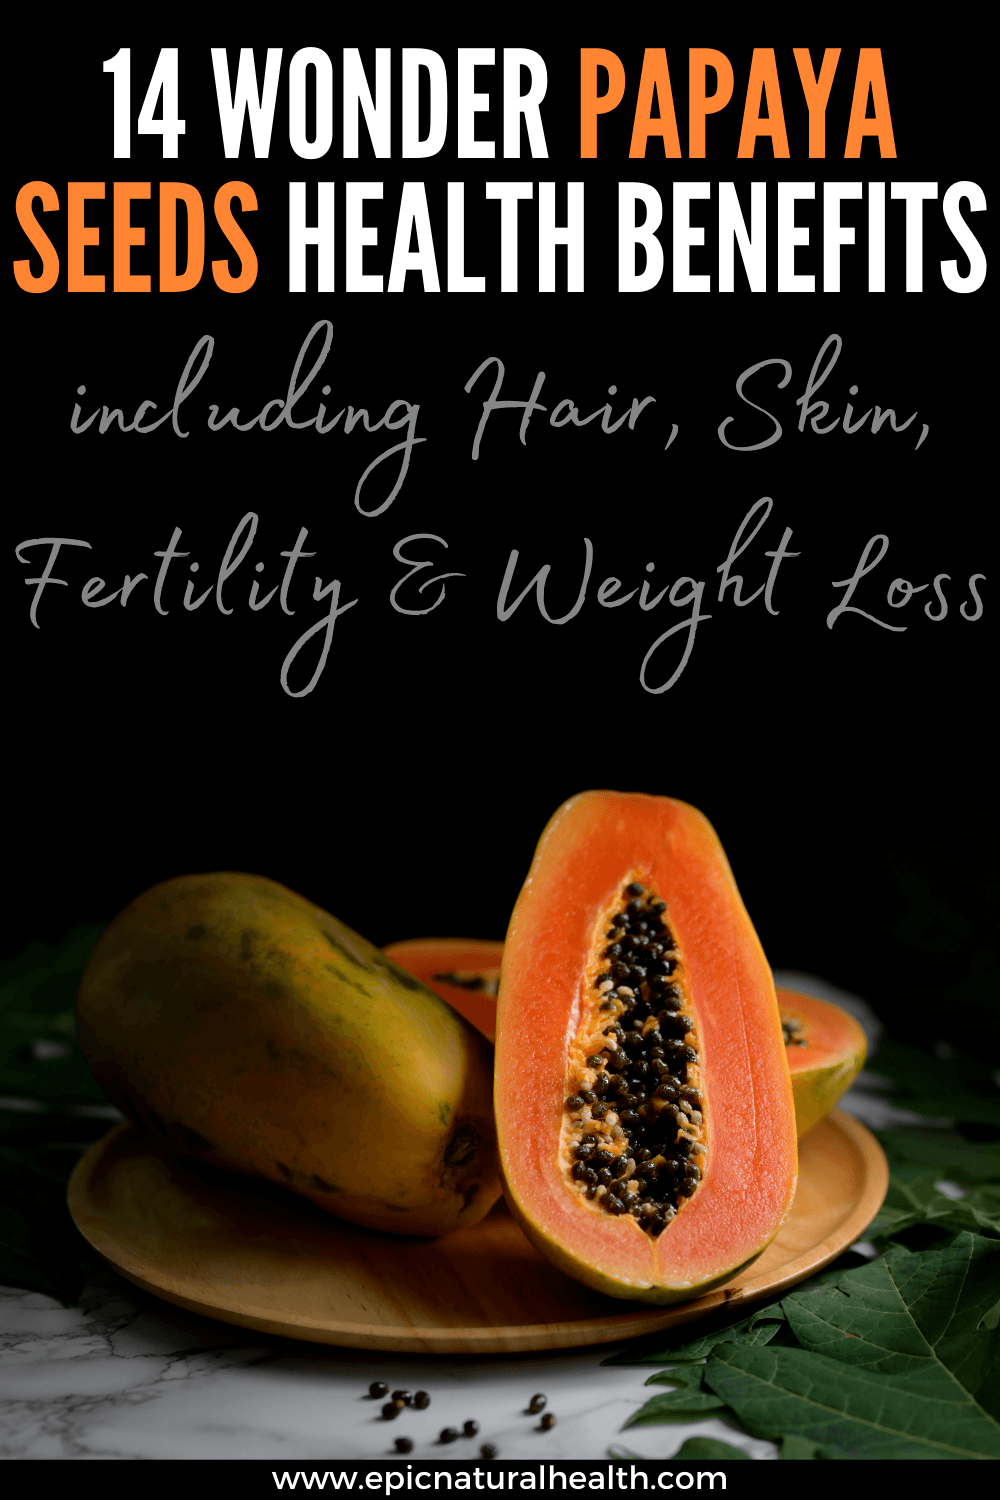 wonder papaya seeds health benefits